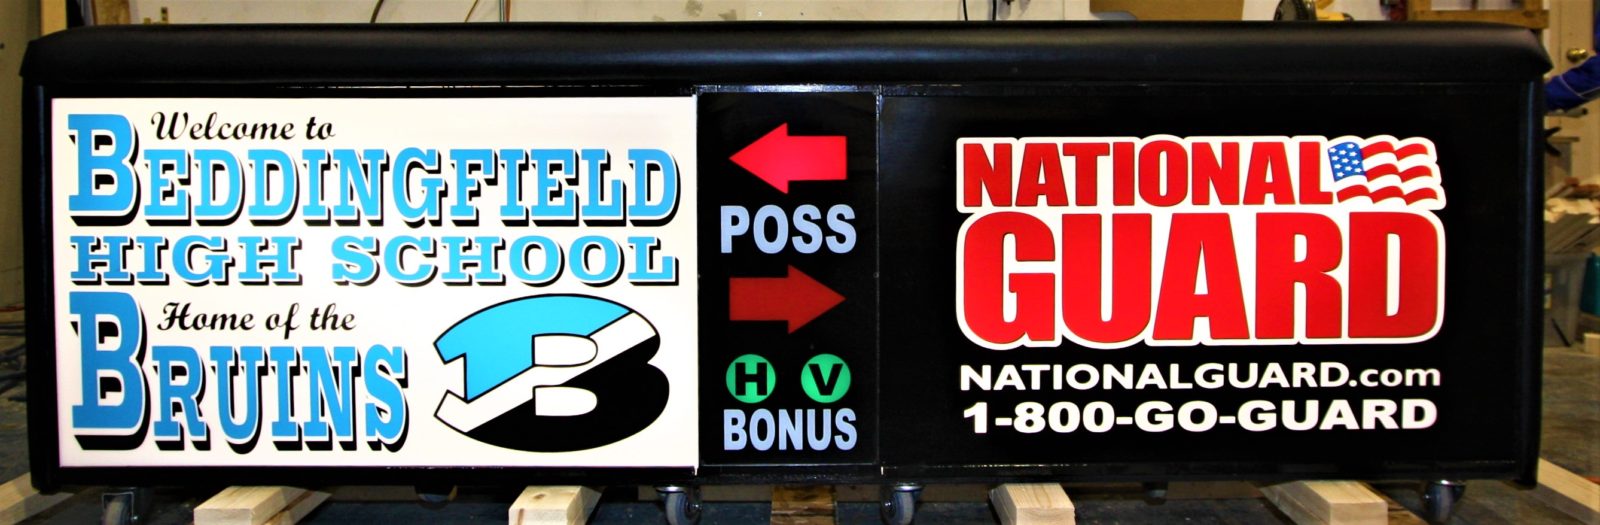 Beddingfield high school scoring table North Carolina Army National Guard NCARNG